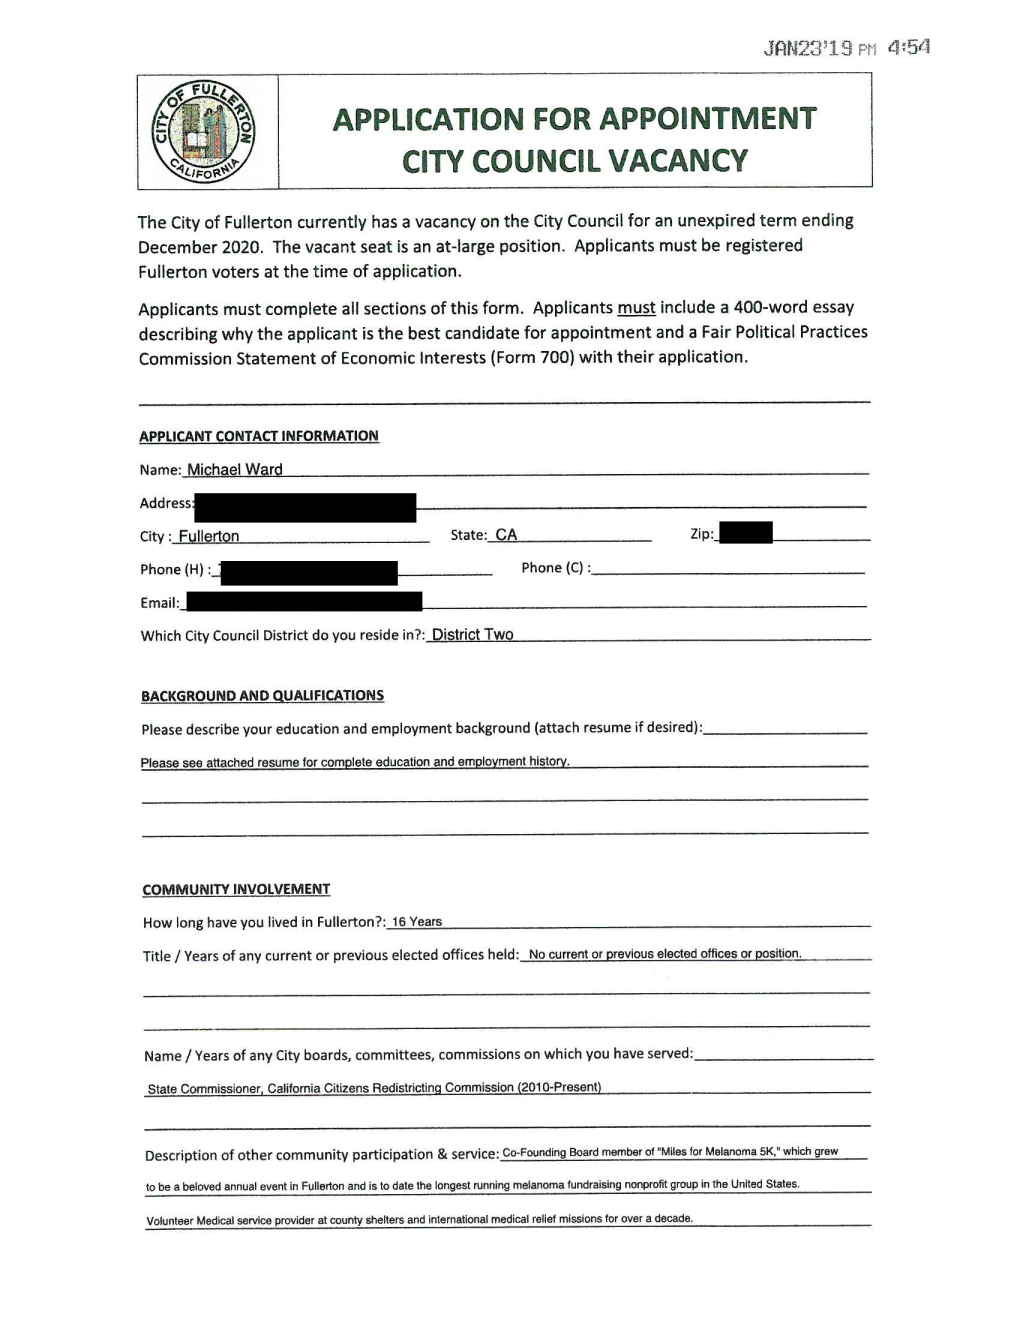 CITY COUNCIL VACANCY the City of Fullerton Currently Has a Vacancy on the City Council for an Unexpired Term Ending December 2020